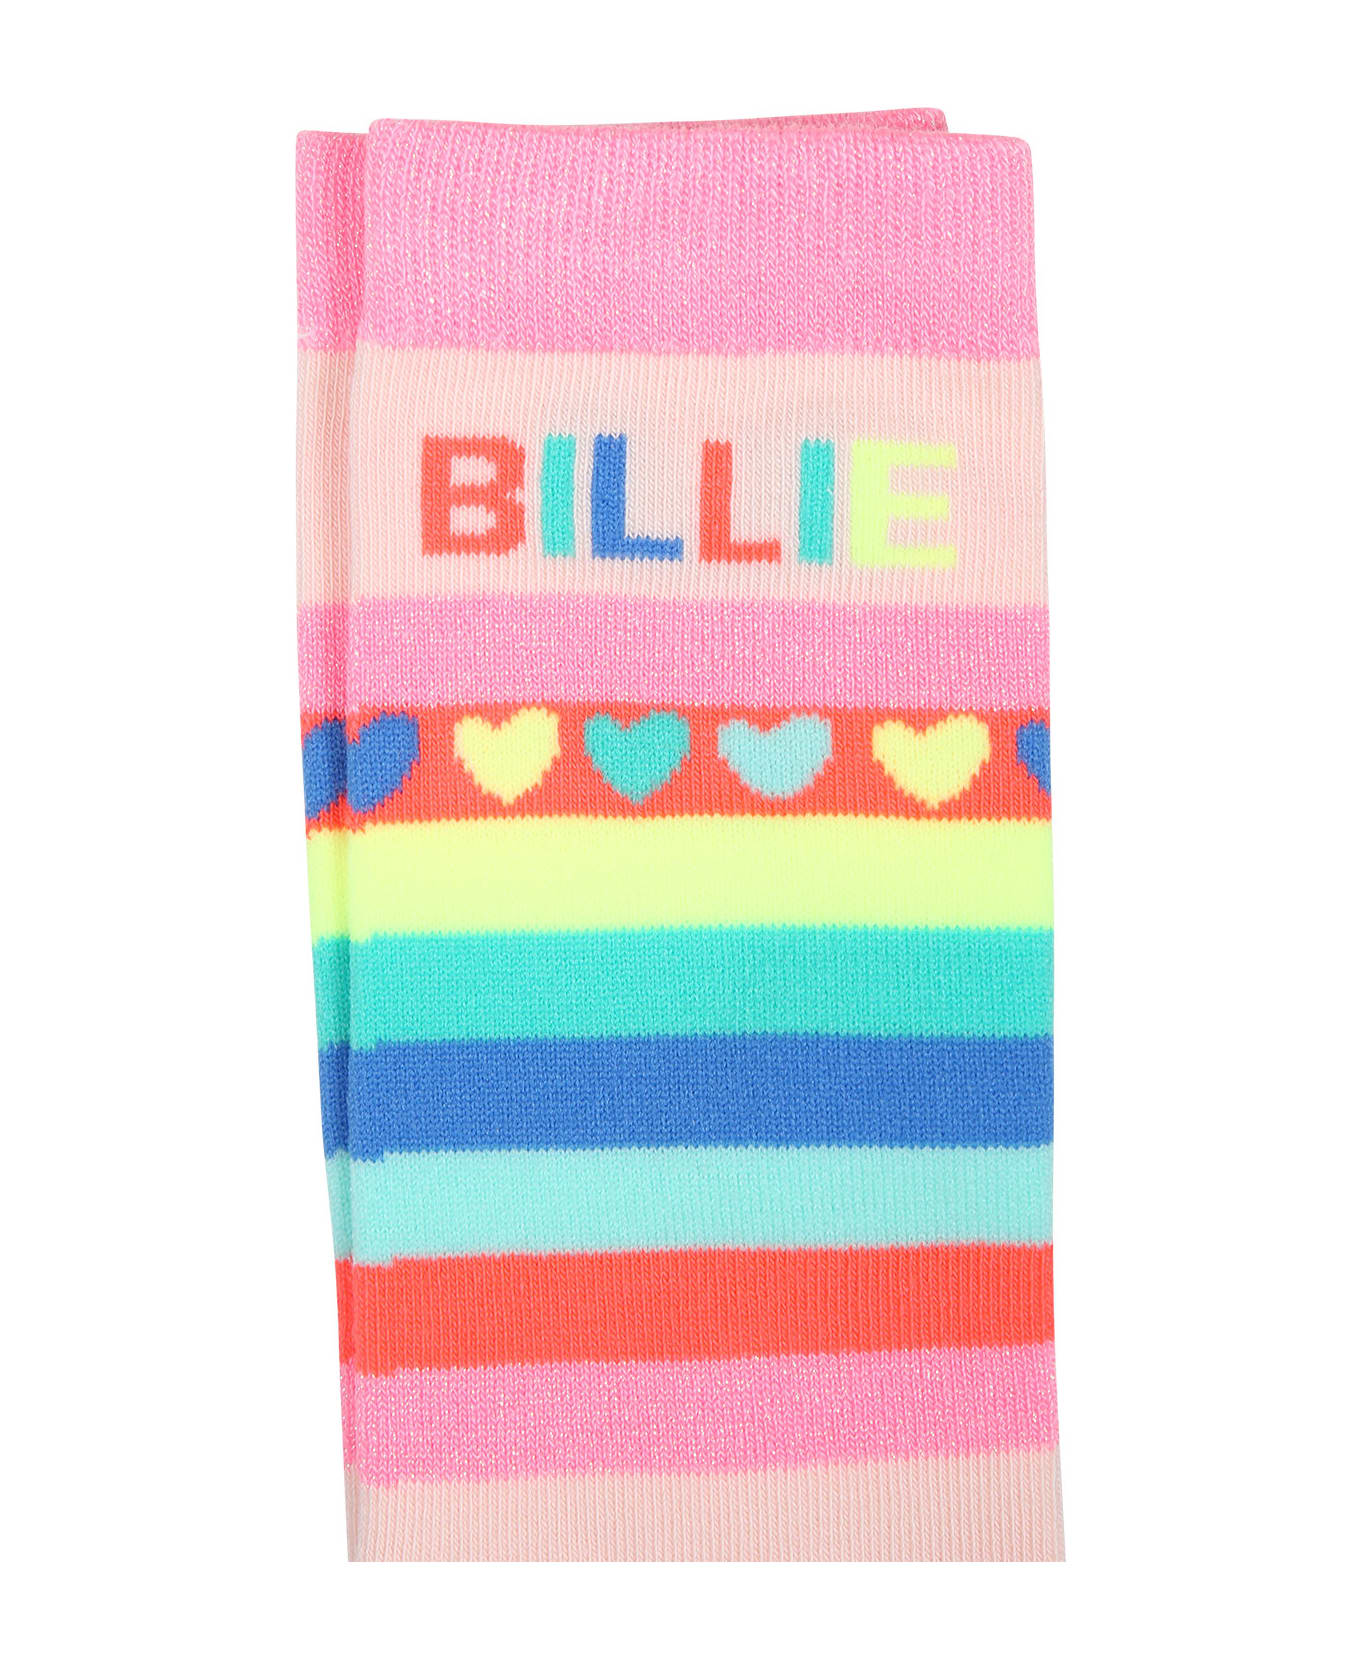 Billieblush Multicolor Socks For Girl With Logo - Multicolor シューズ